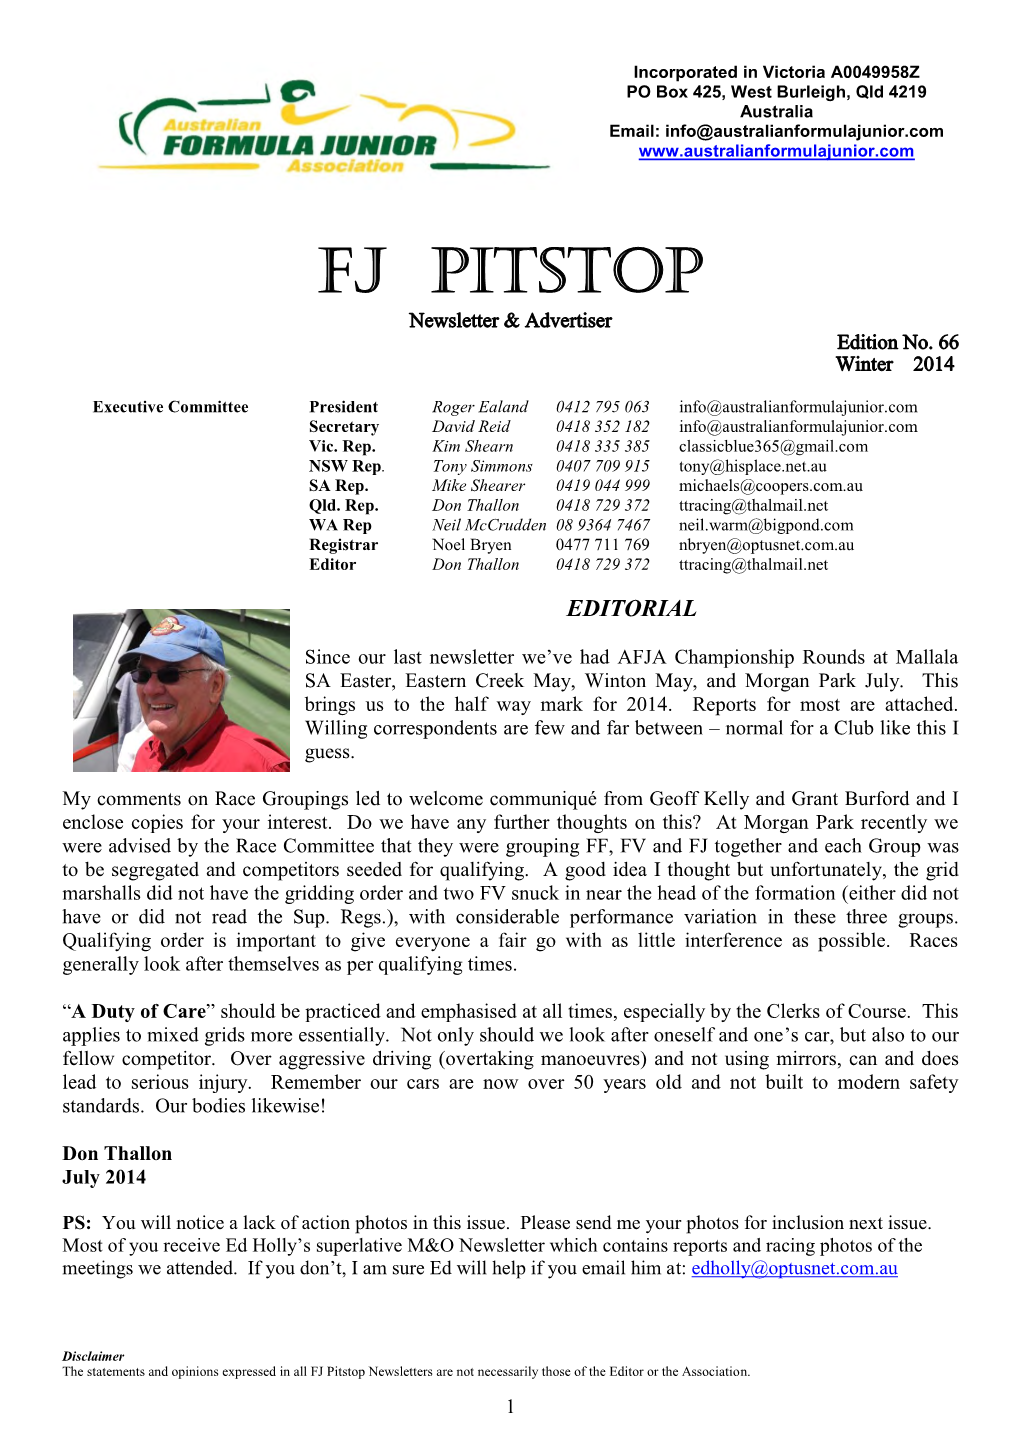 FJ PITSTOP Newsletter & Advertiser Edition No